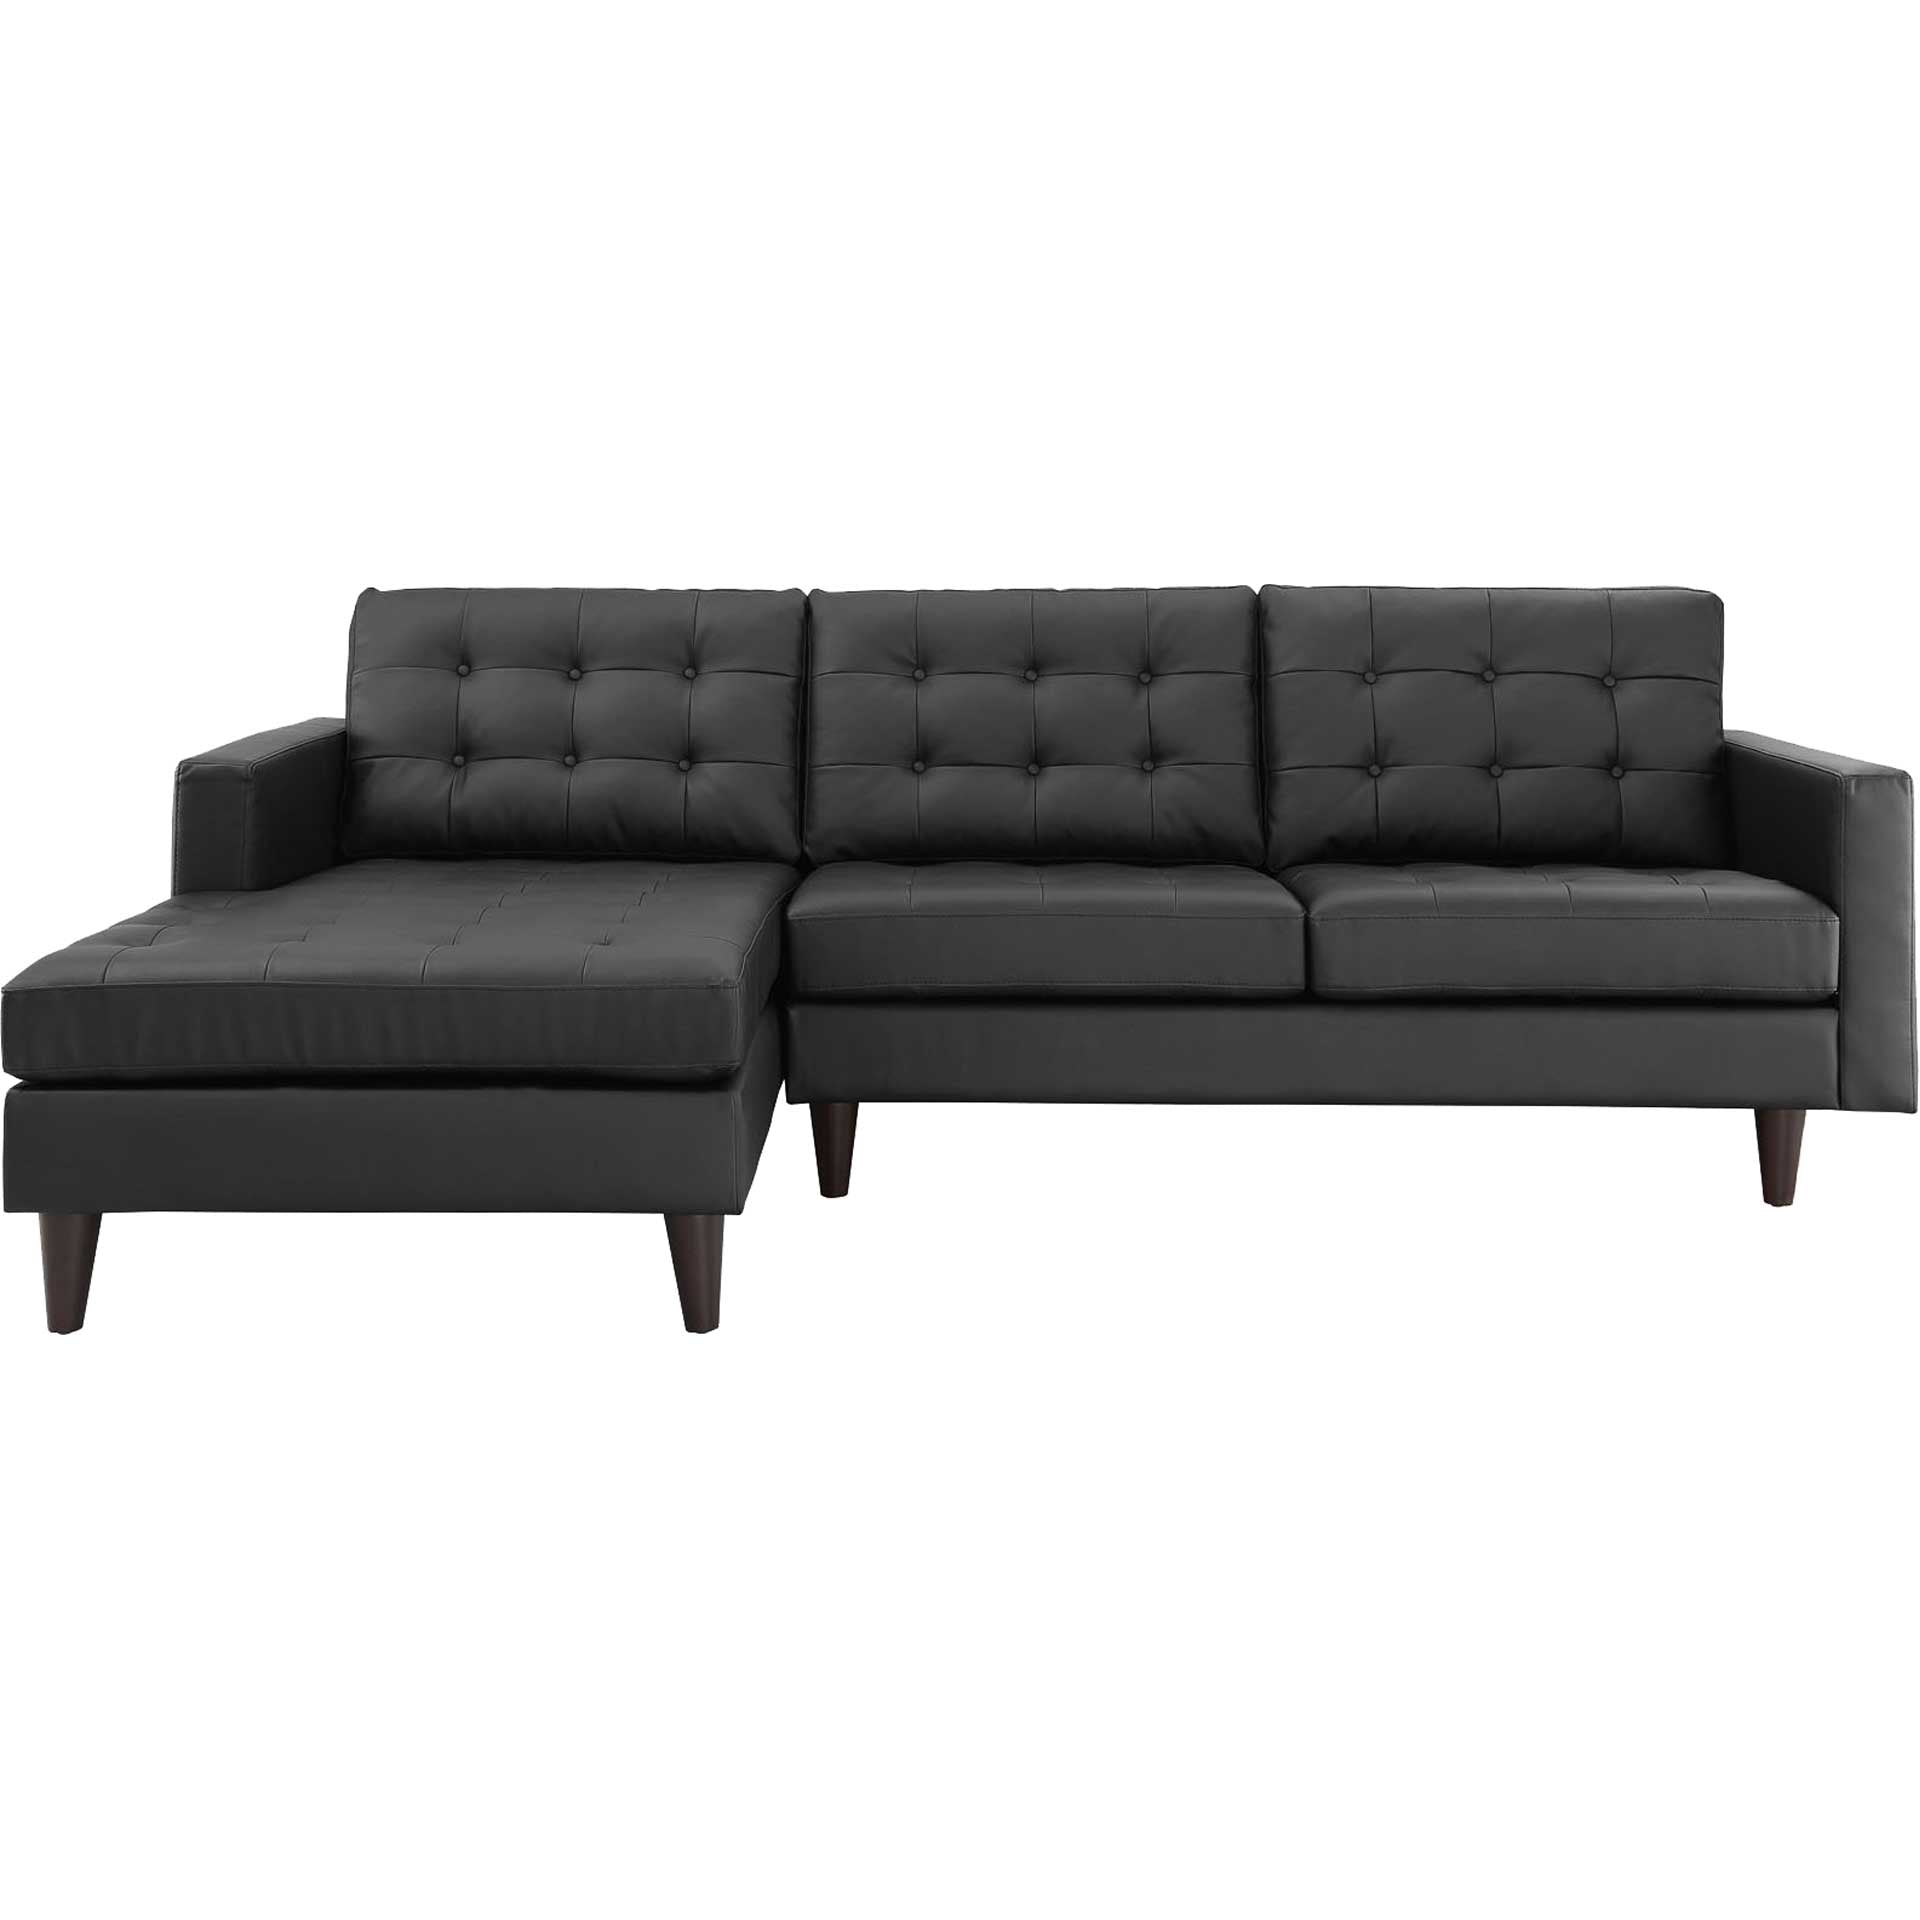 Era Leather Sectional Sofa Black